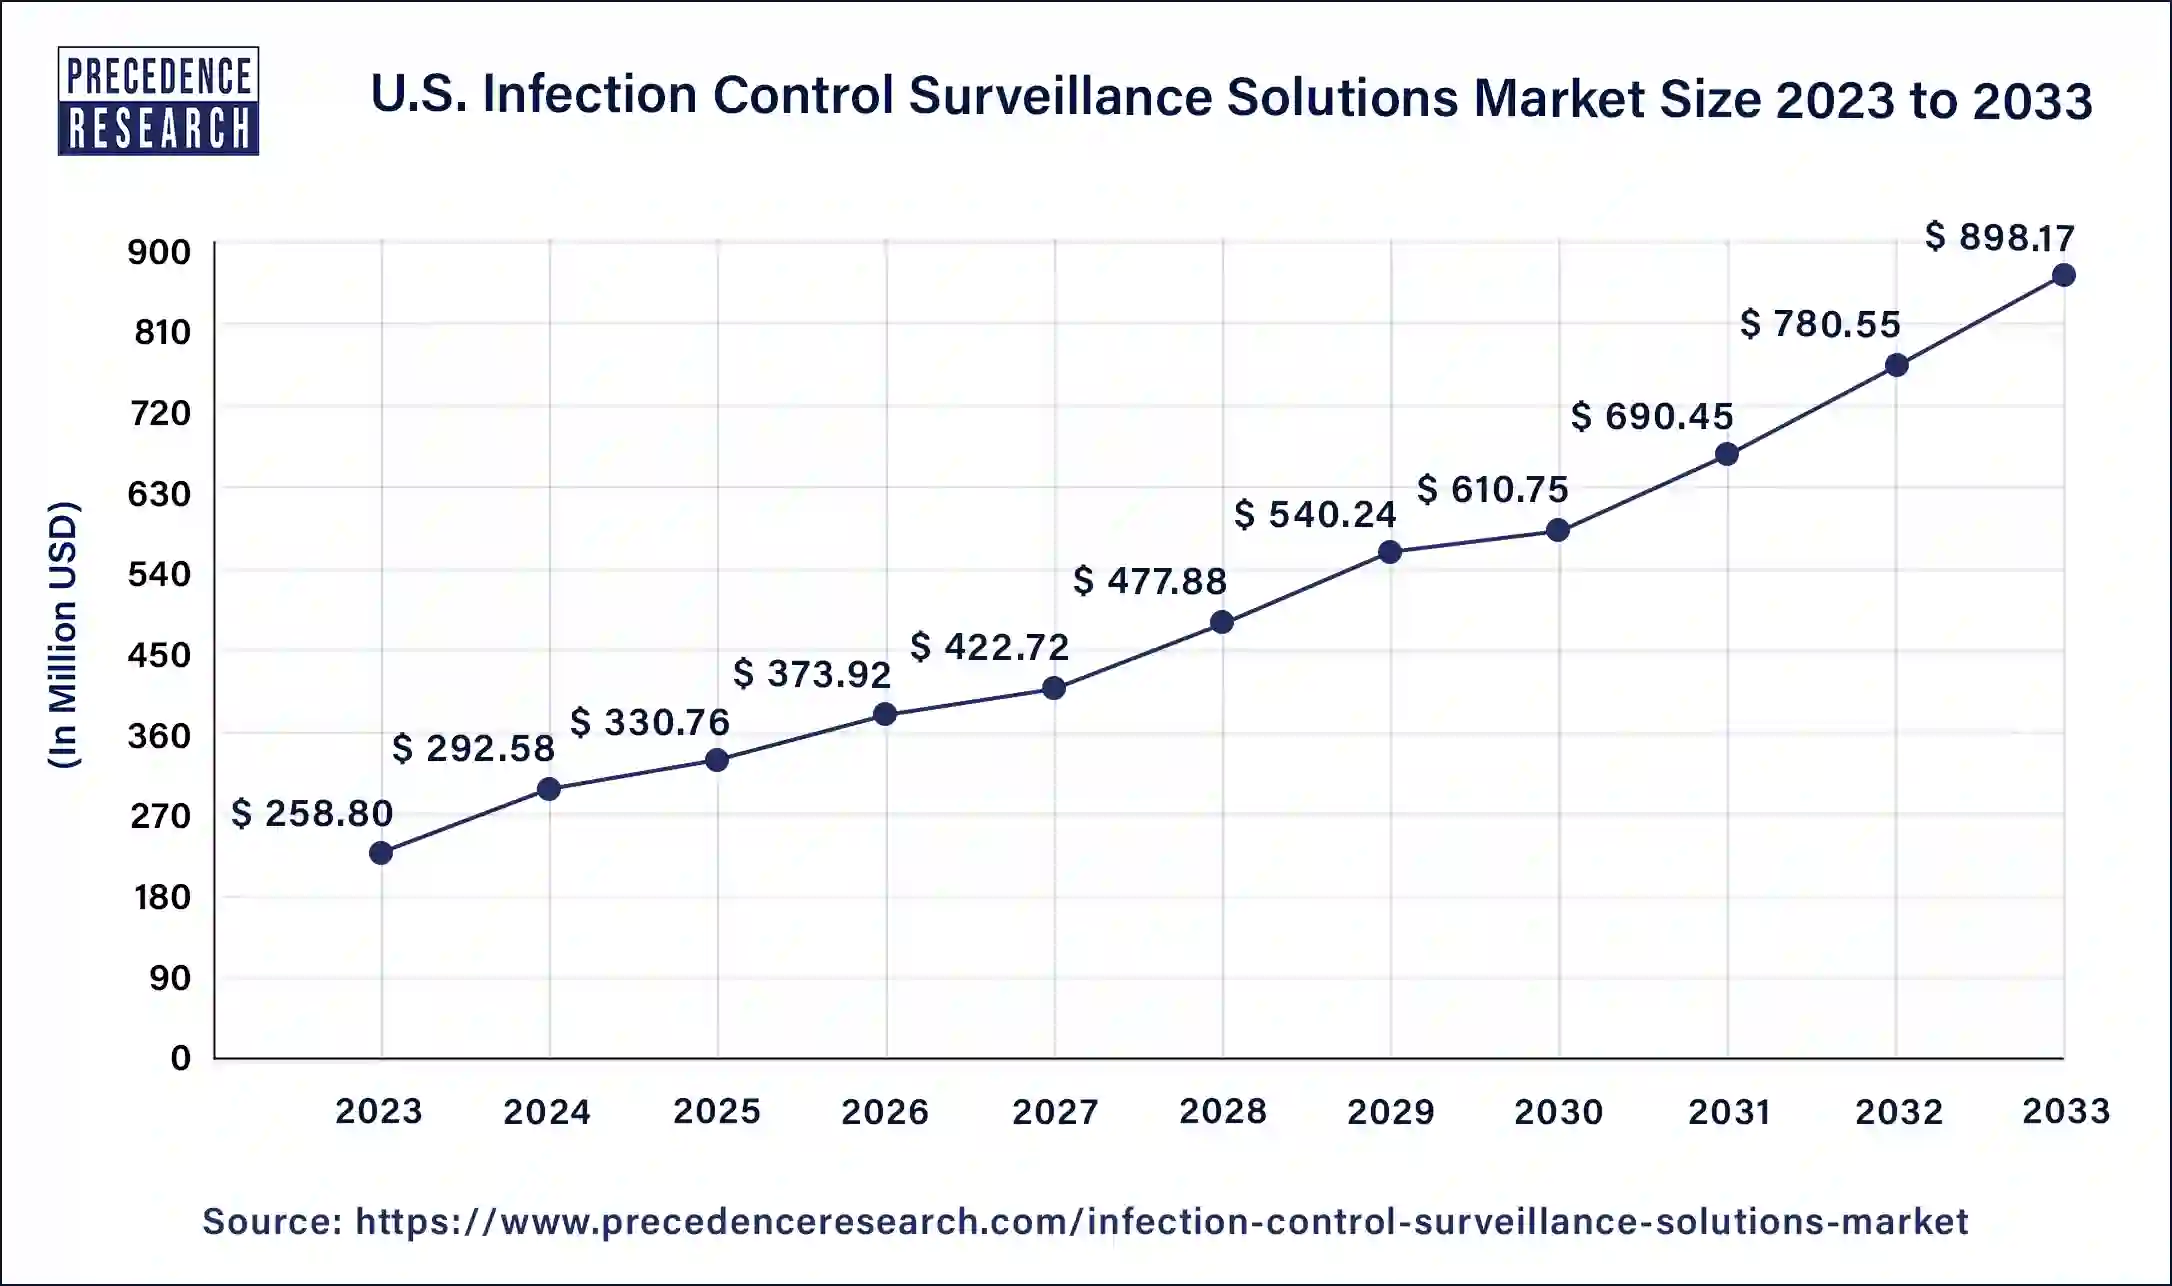 U.S. Infection Control Surveillance Solutions Market Size 2024 to 2033